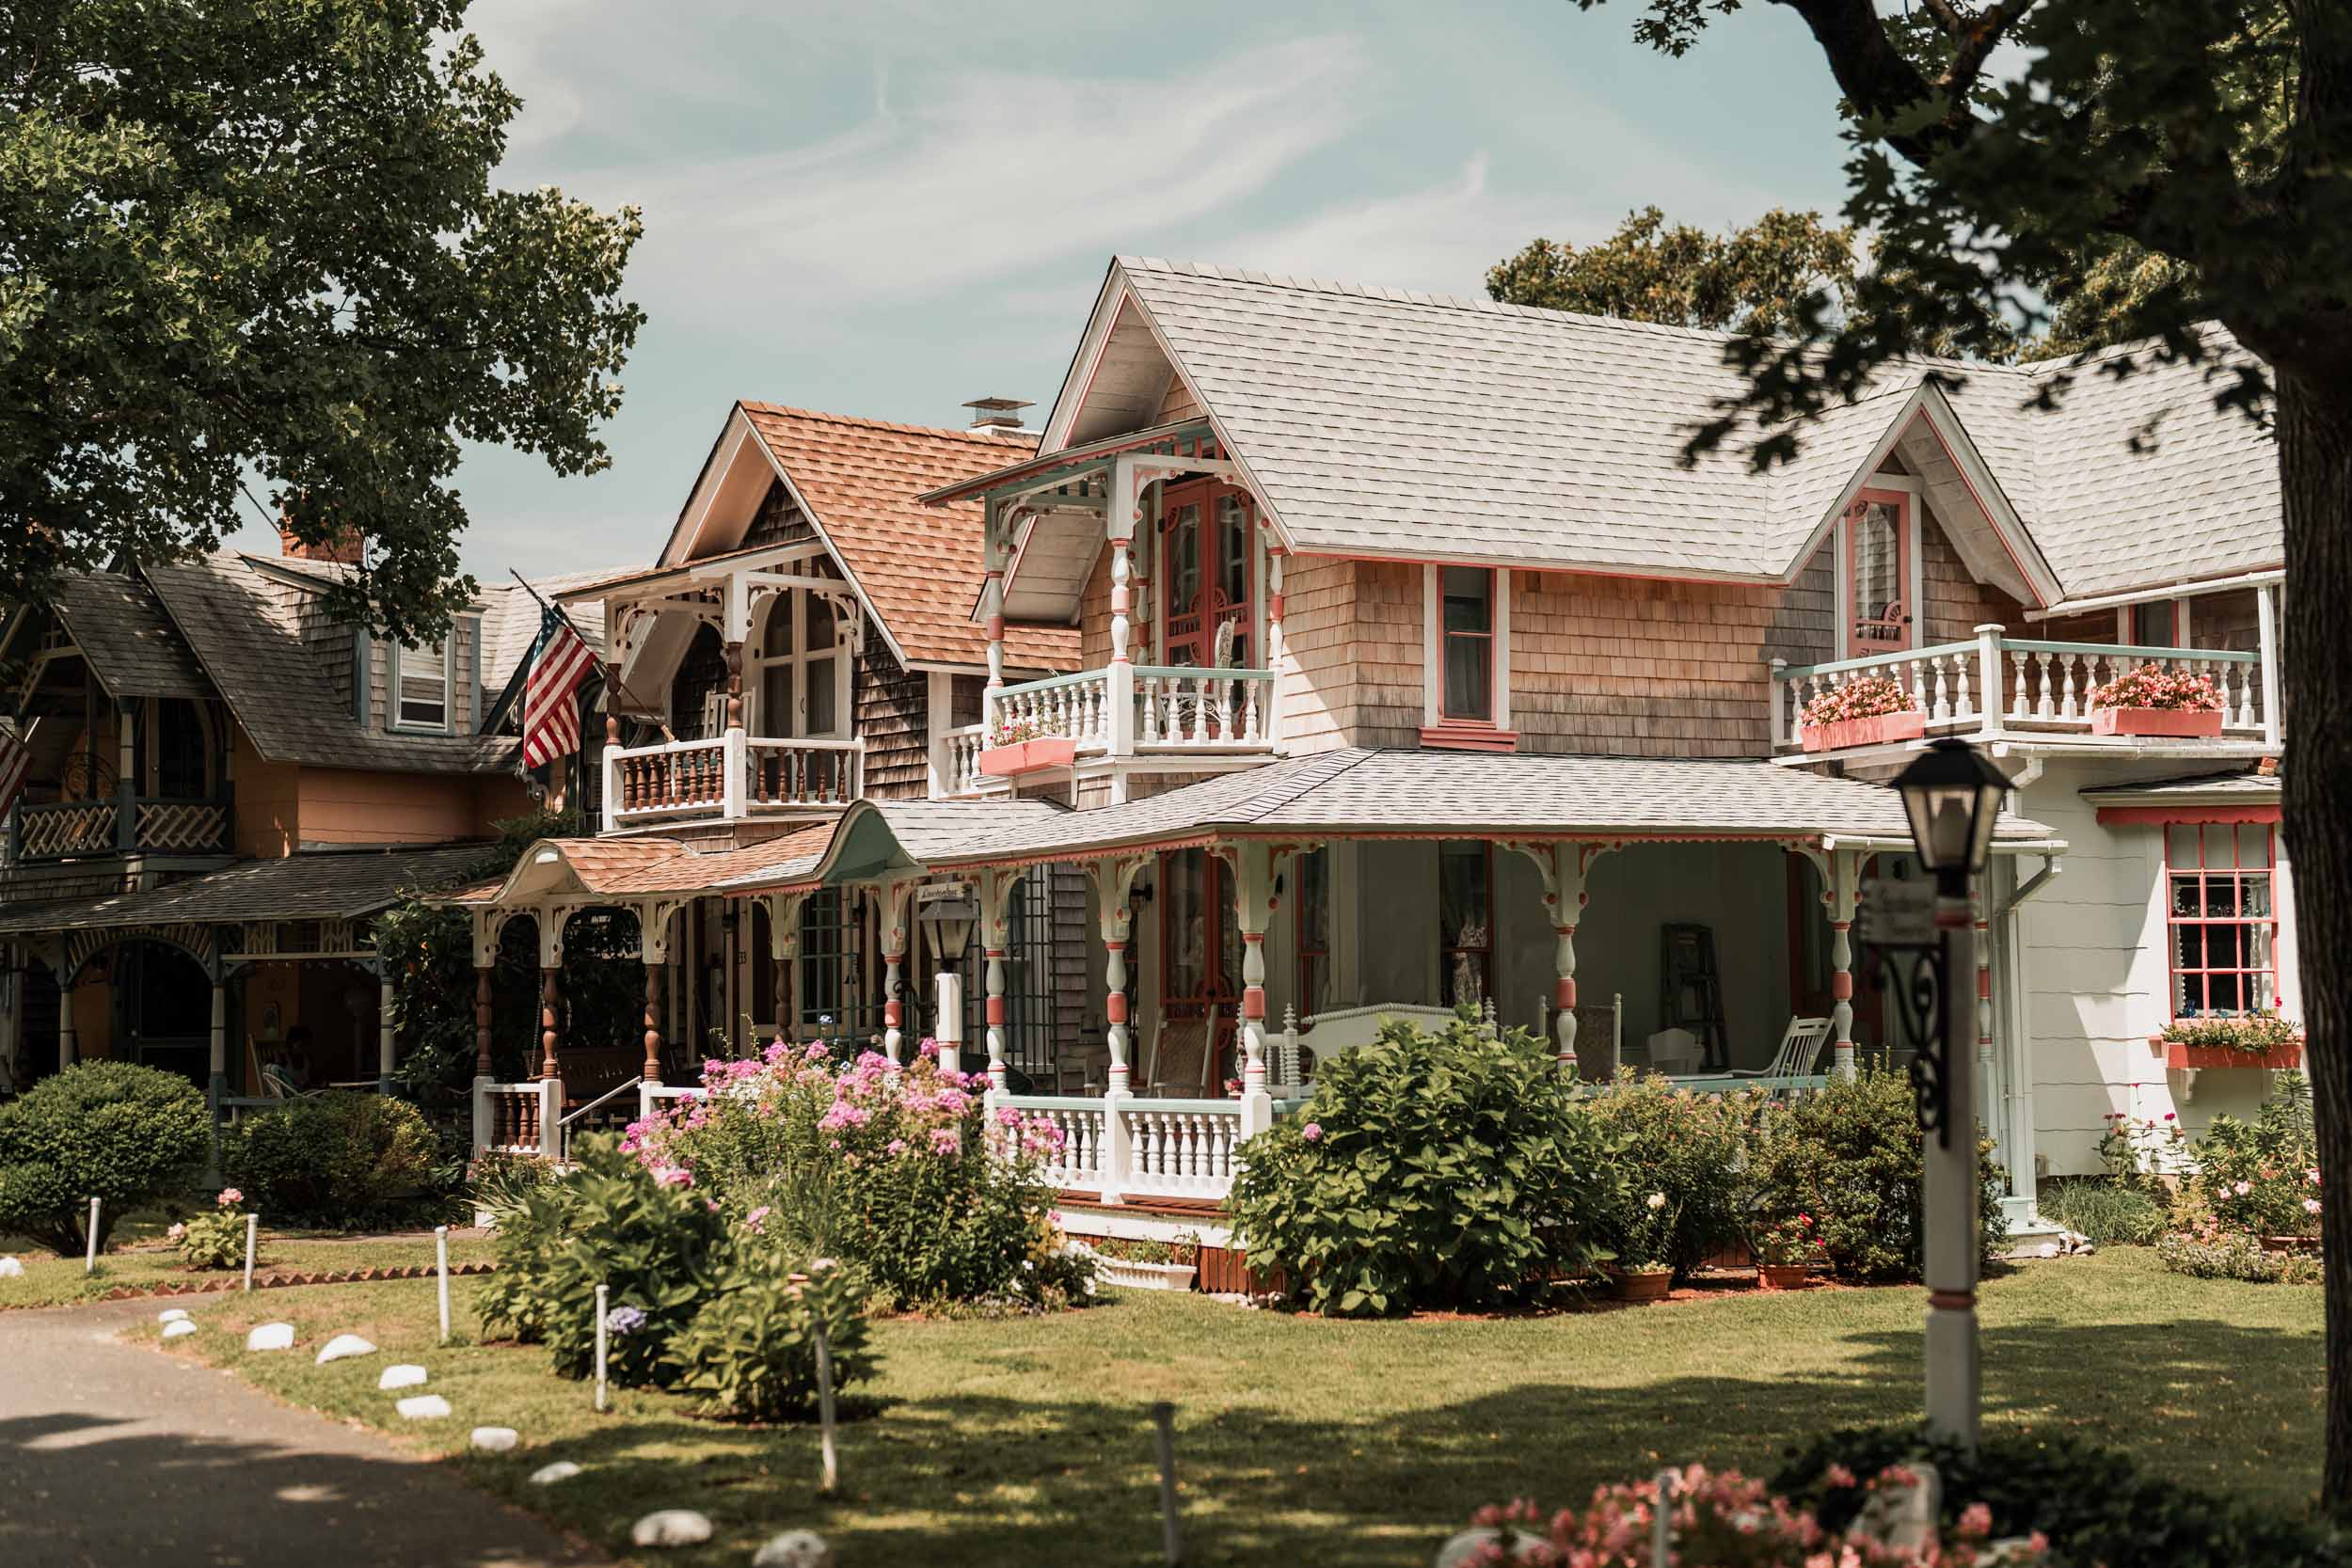 Style-Senses-An-Trieu-The-Row-Marthas-Vineyard-Oak-Bluff-Edgartown-Aquinnah-New-England gingerbread cottages